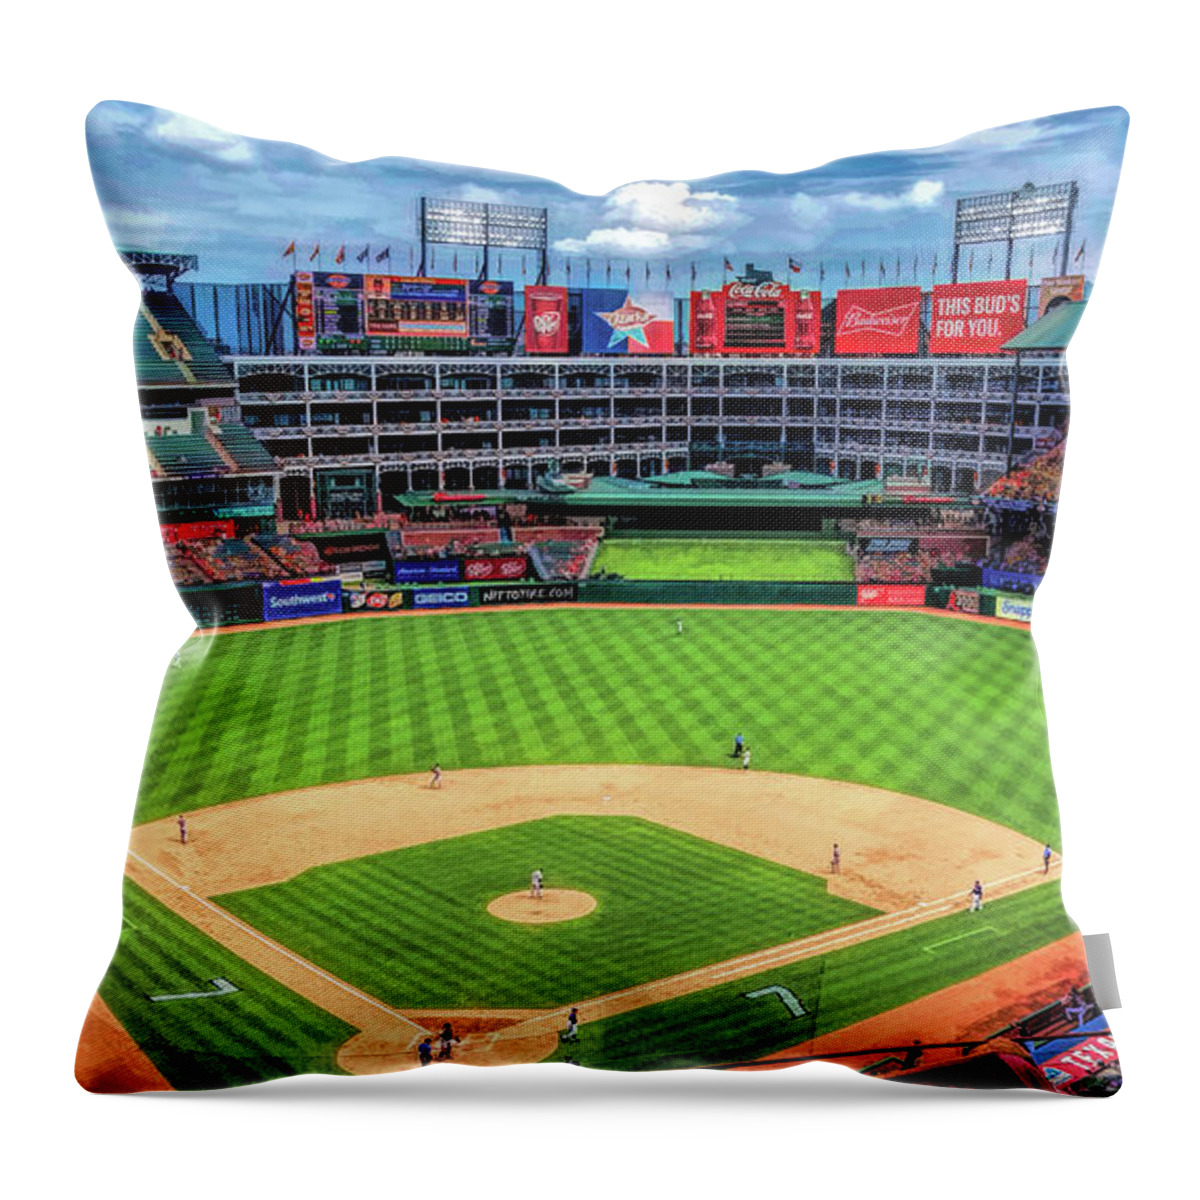 Globe Life Park Throw Pillow featuring the painting Globe Life Park Texas Rangers Baseball Ballpark Stadium by Christopher Arndt